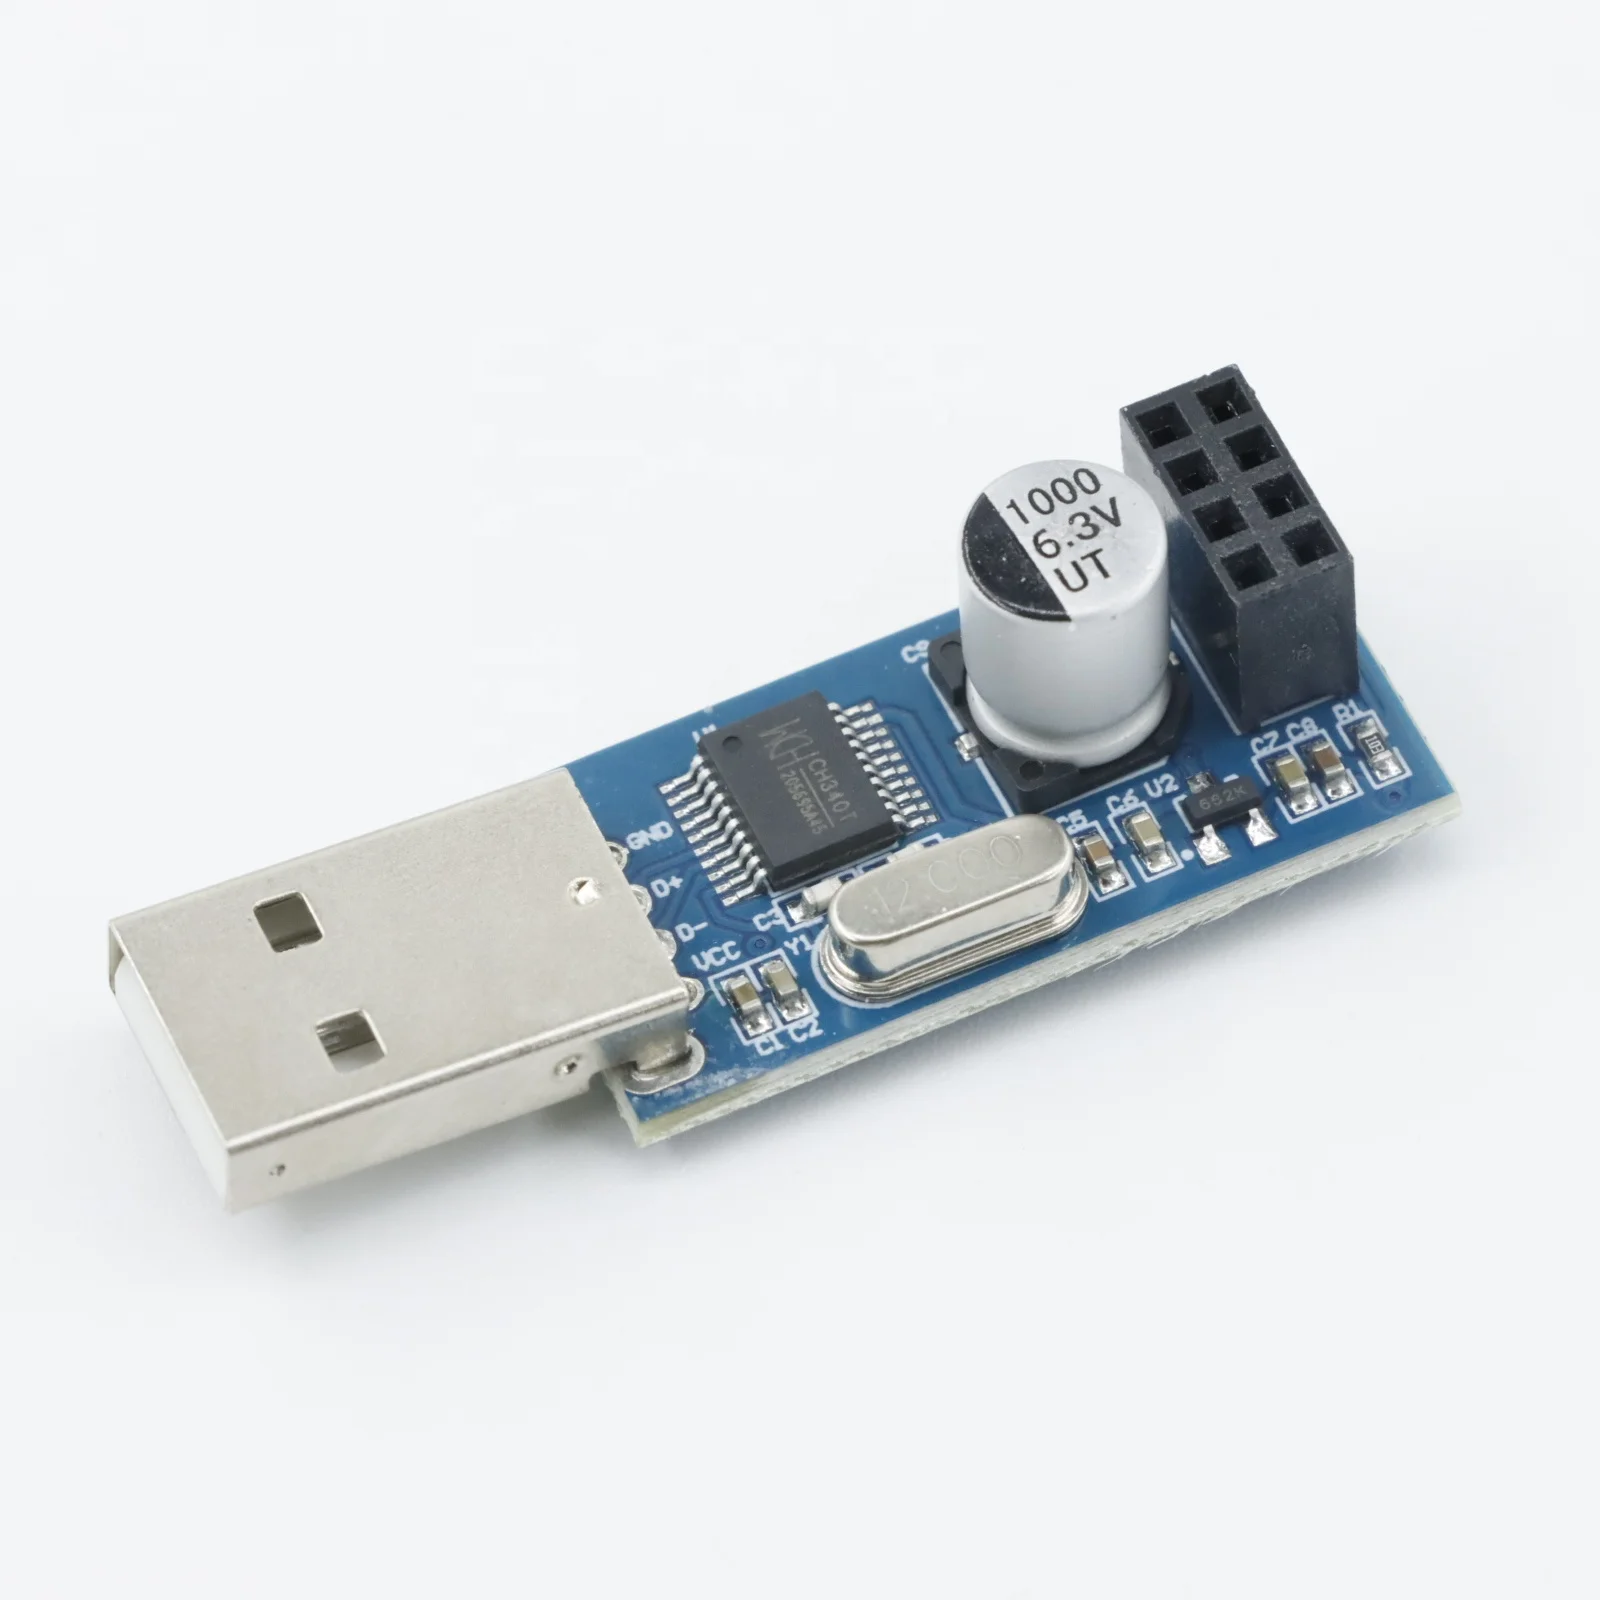 USB vers série ESP8266 sans fil Wifi Module developent Board 8266 Adaptateur Wifi 